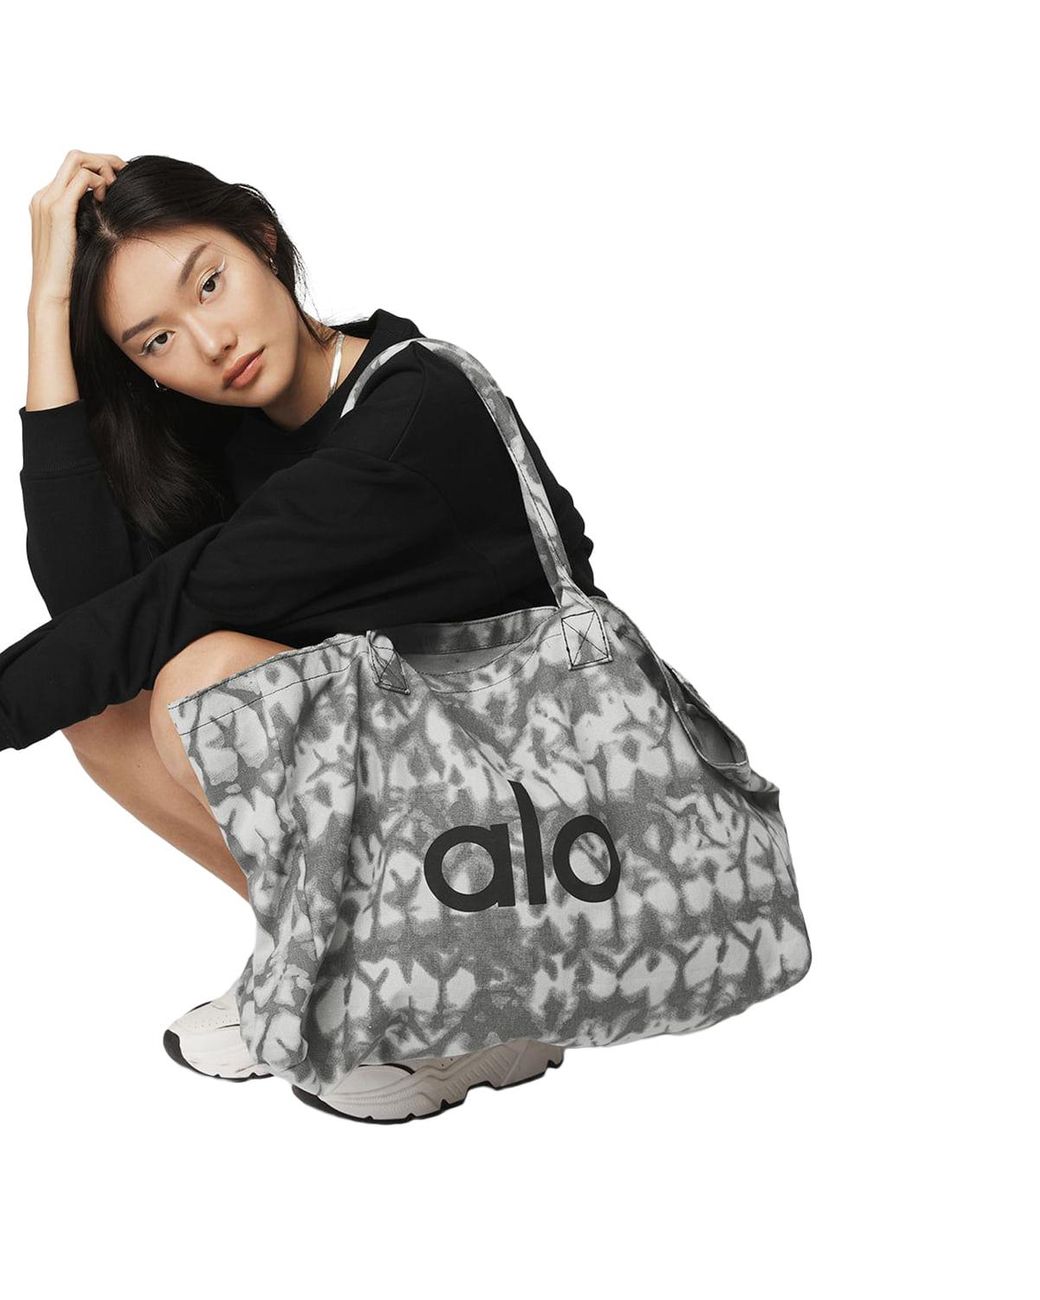 Alo yoga tote - Women's handbags